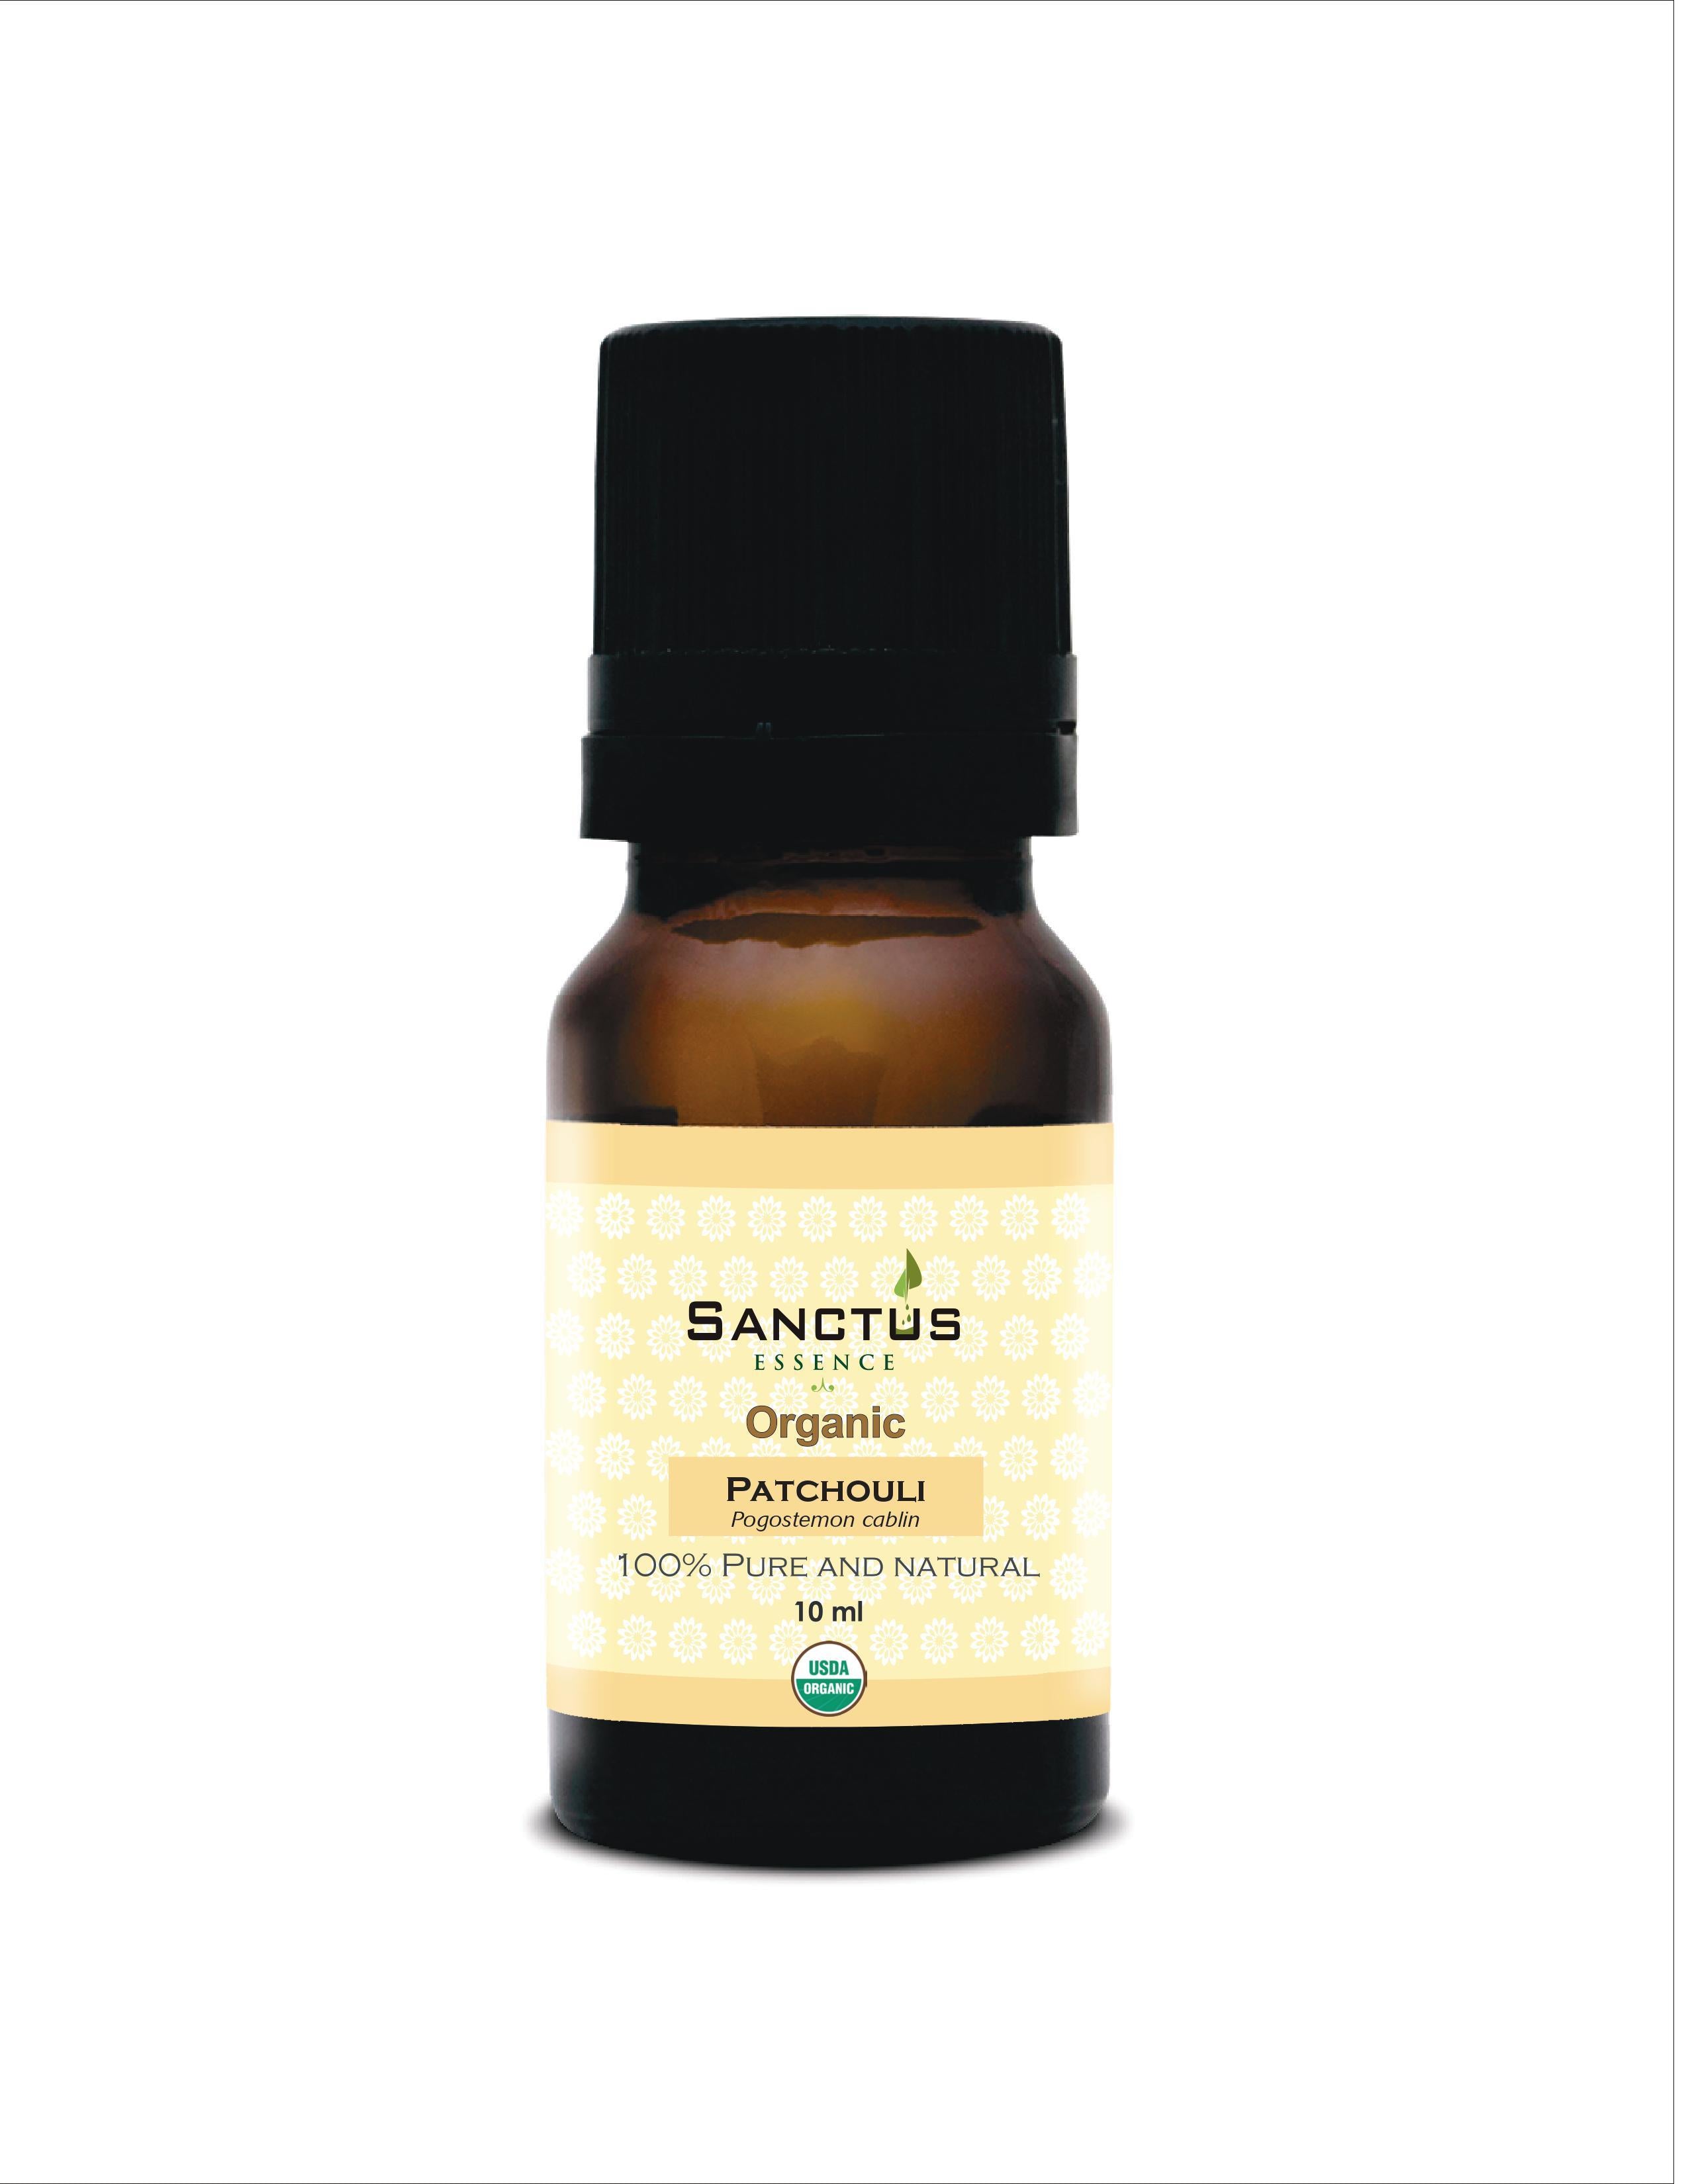 Organic Patchouli oil - Sanctus Essence